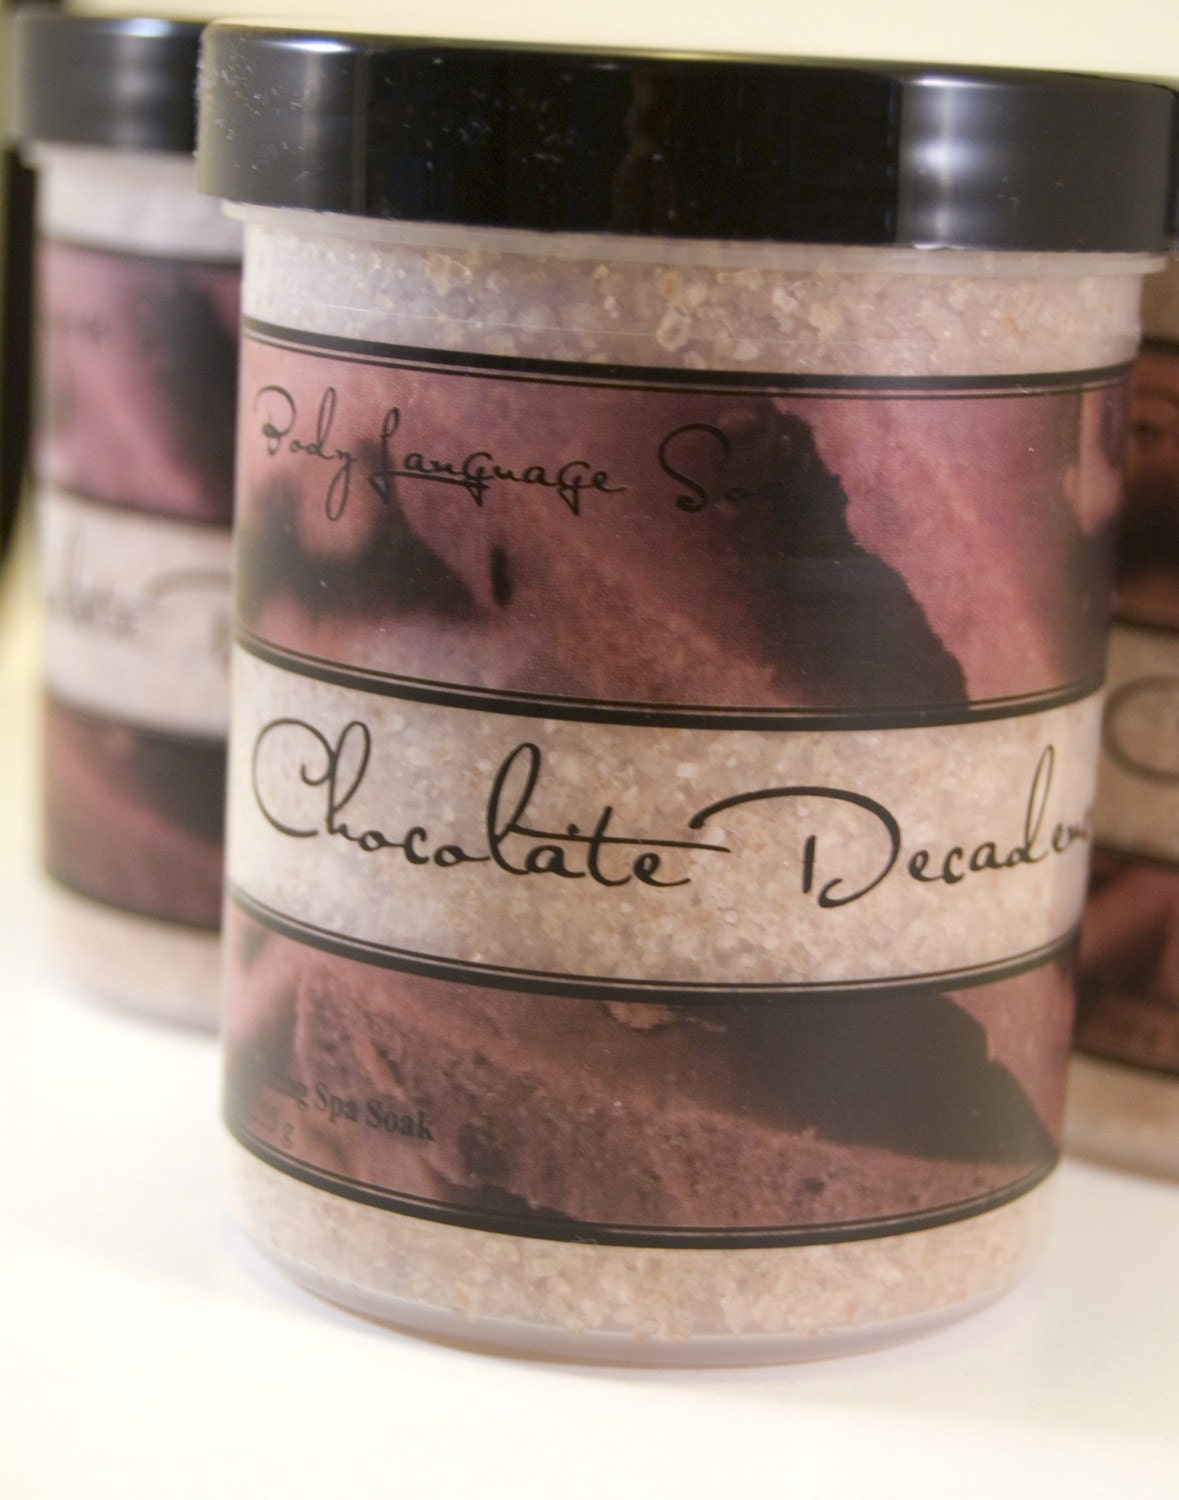 Chocolate Decadence Spa Soak - Moisturizing Bath Salts